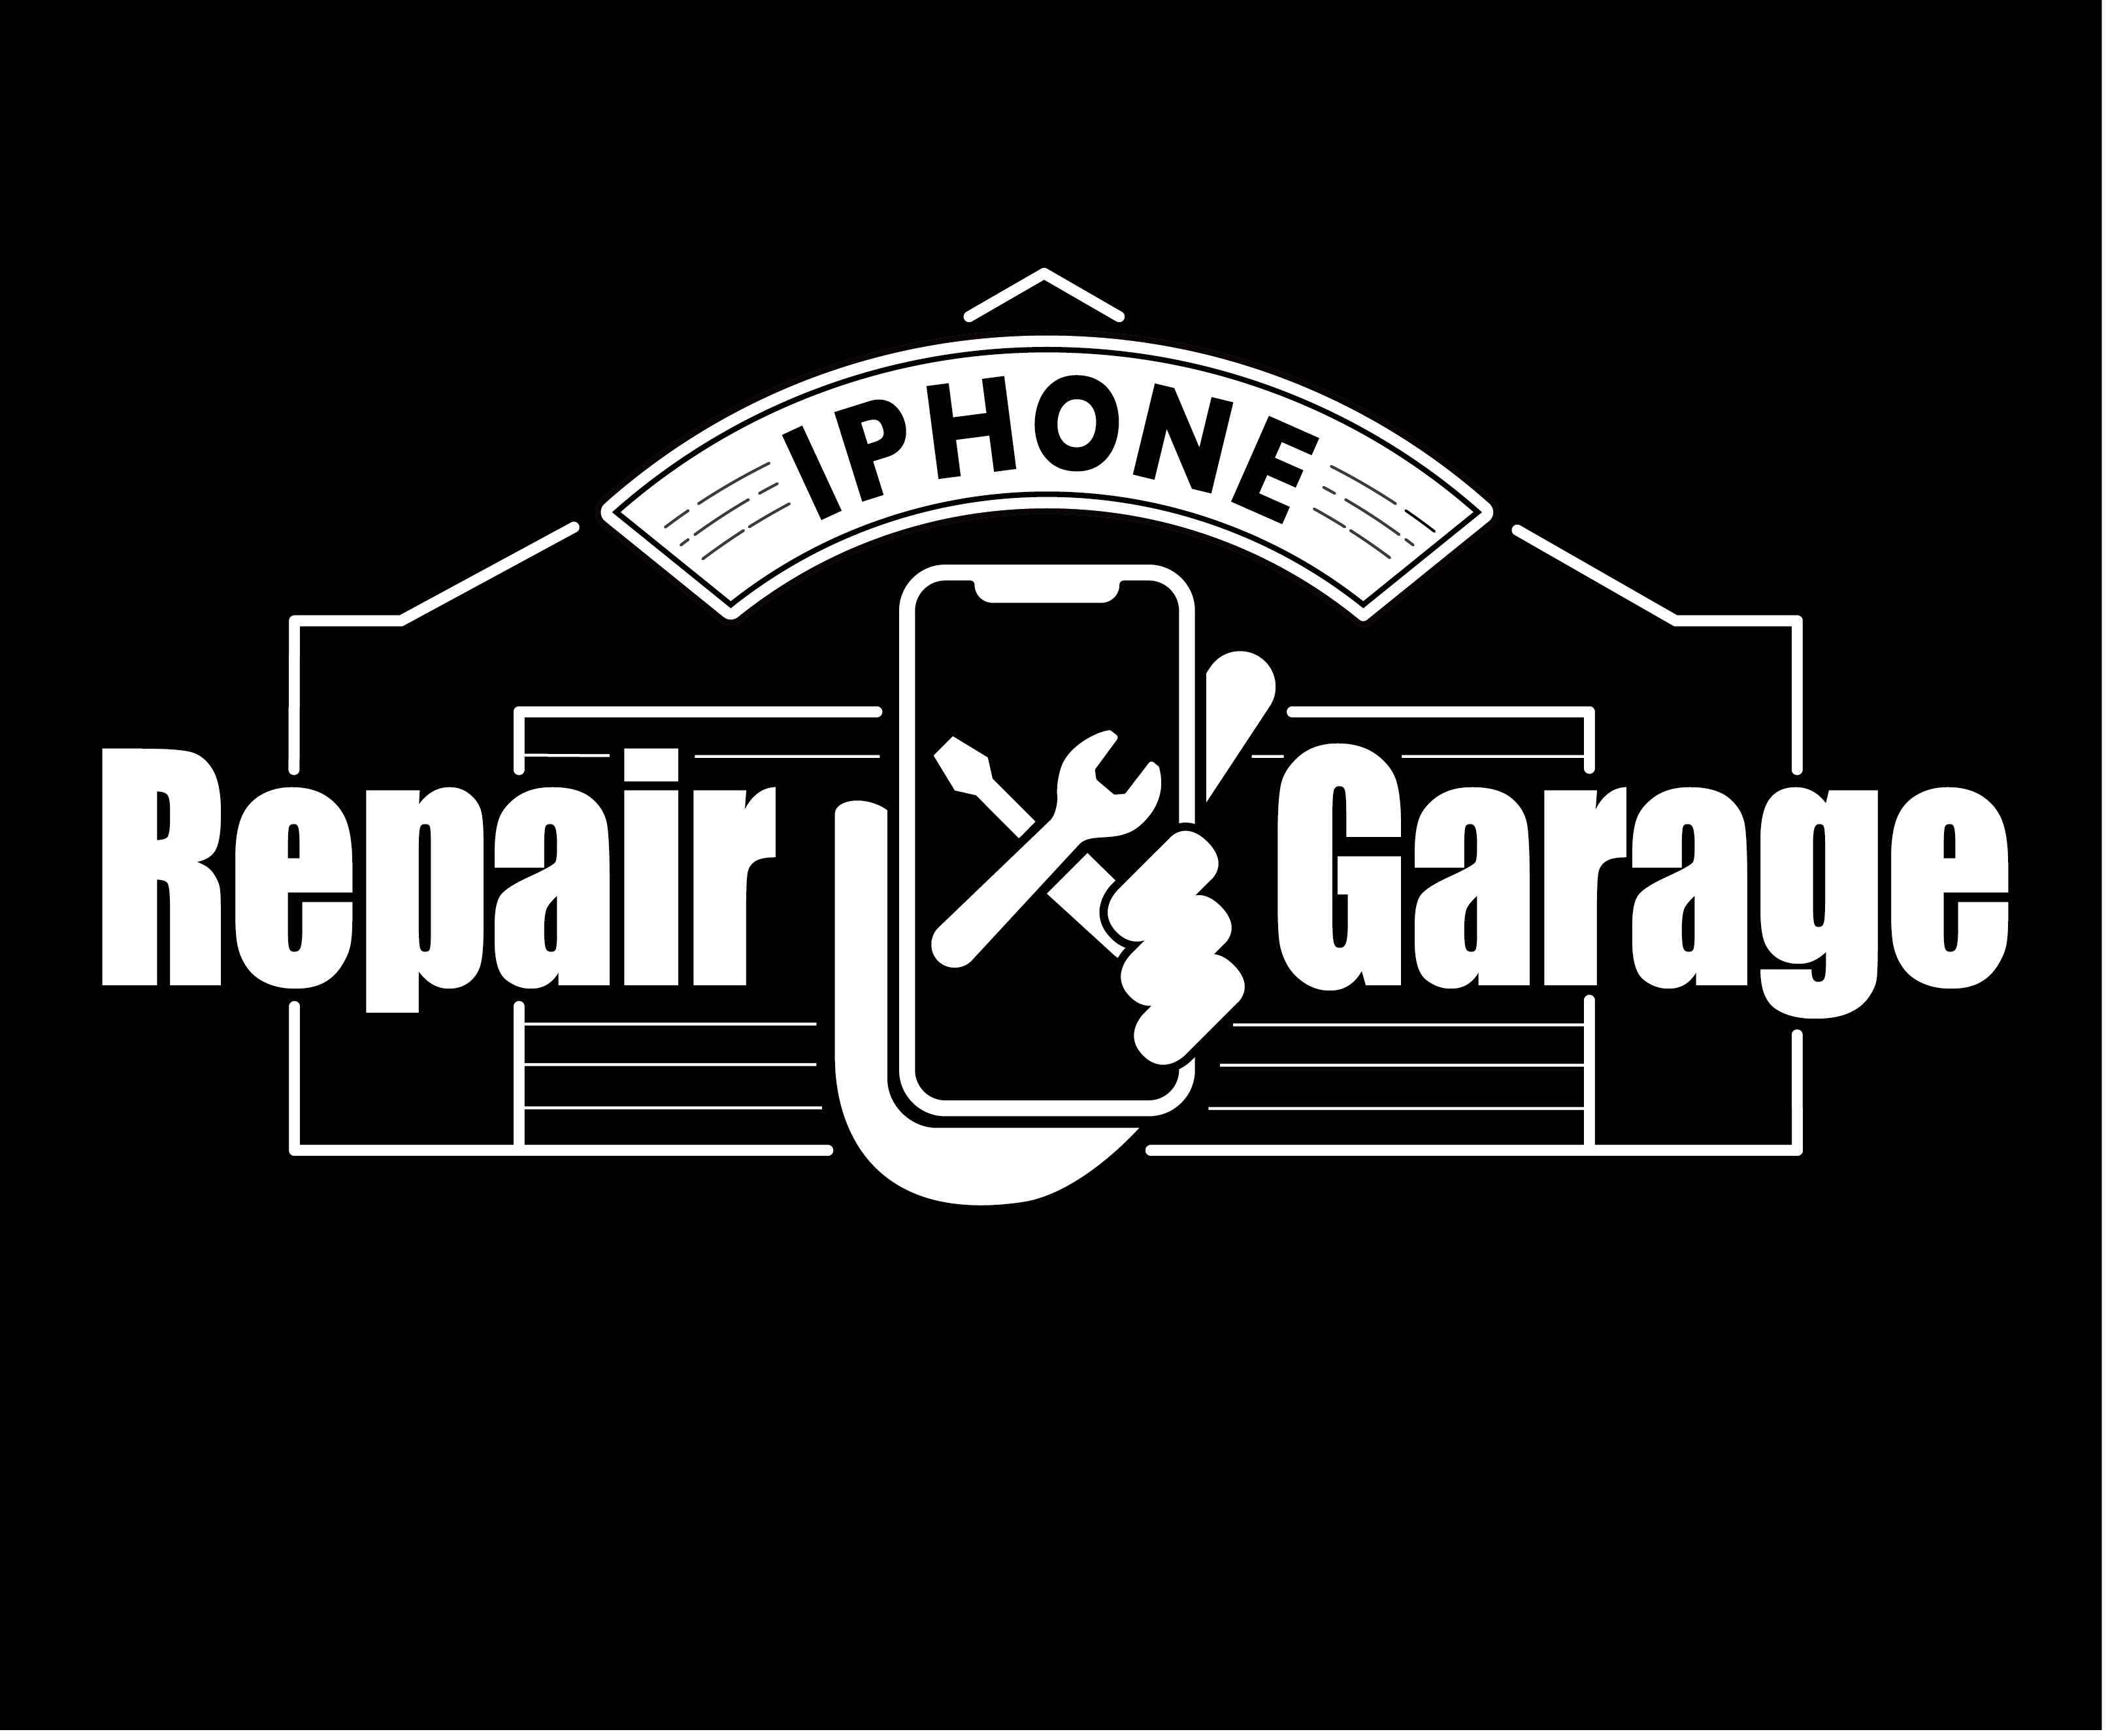 iphone Repair Garage MITO